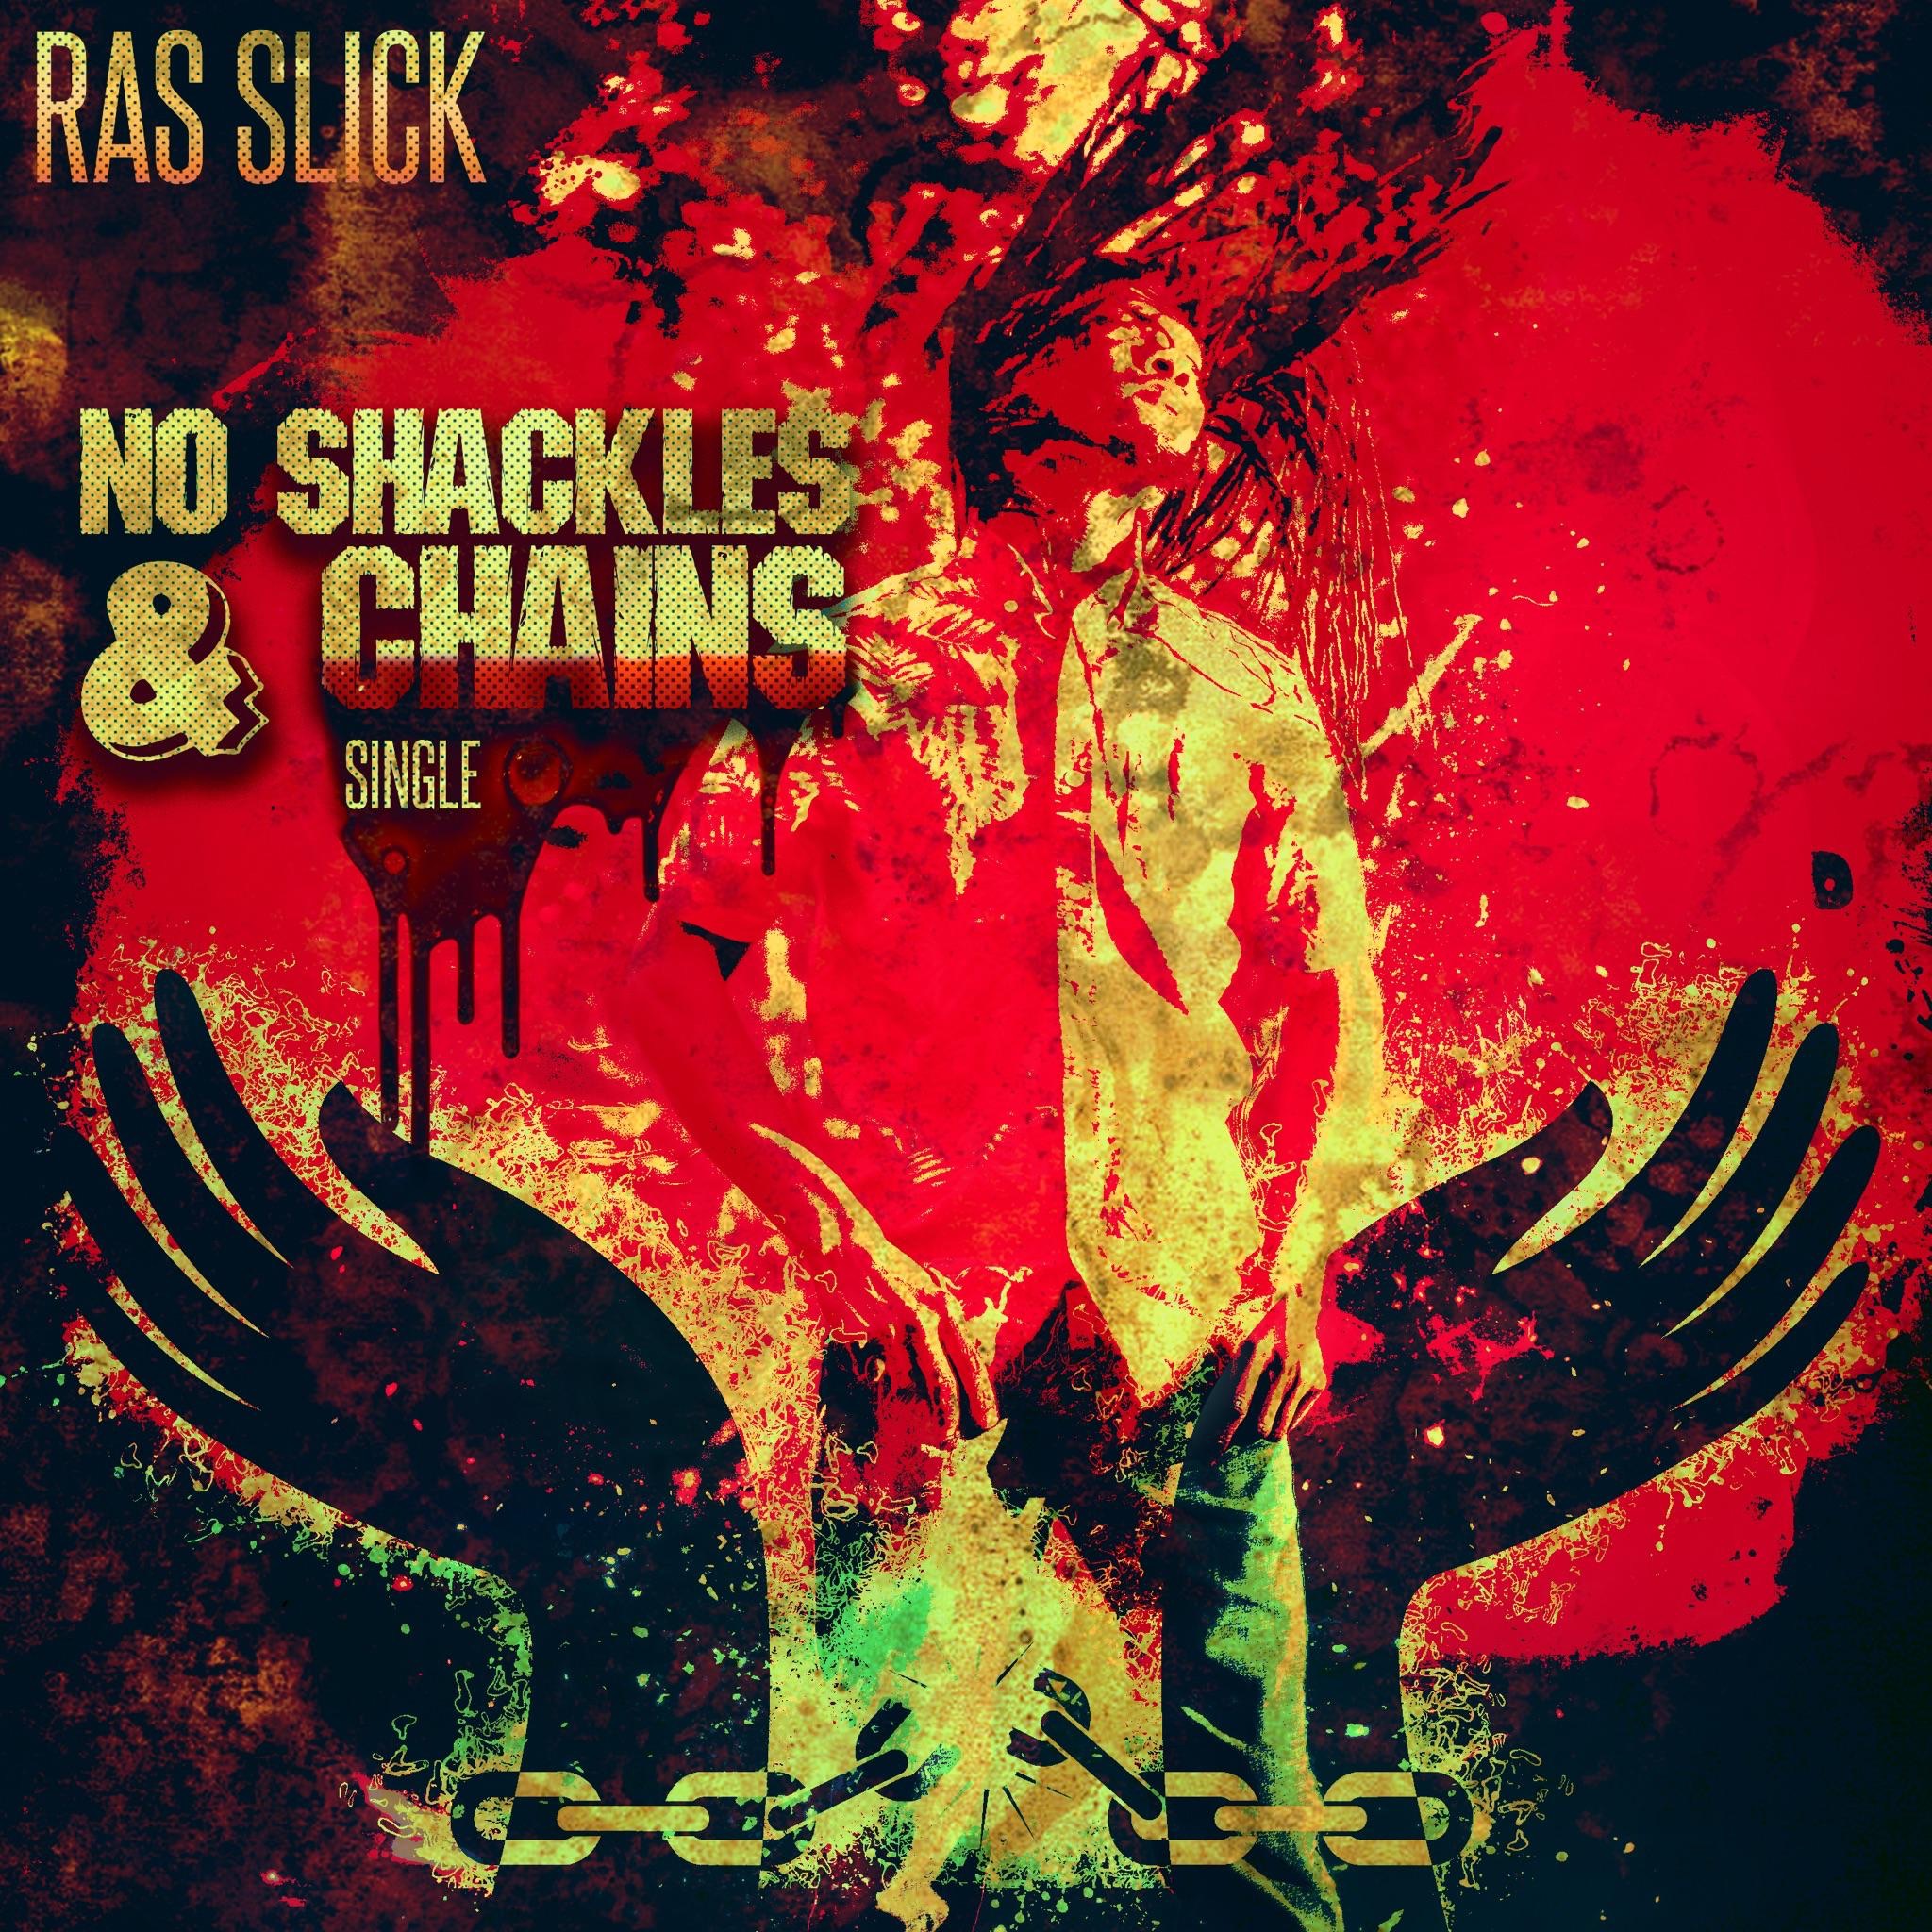 Ras Slick - No Shackles and Chains